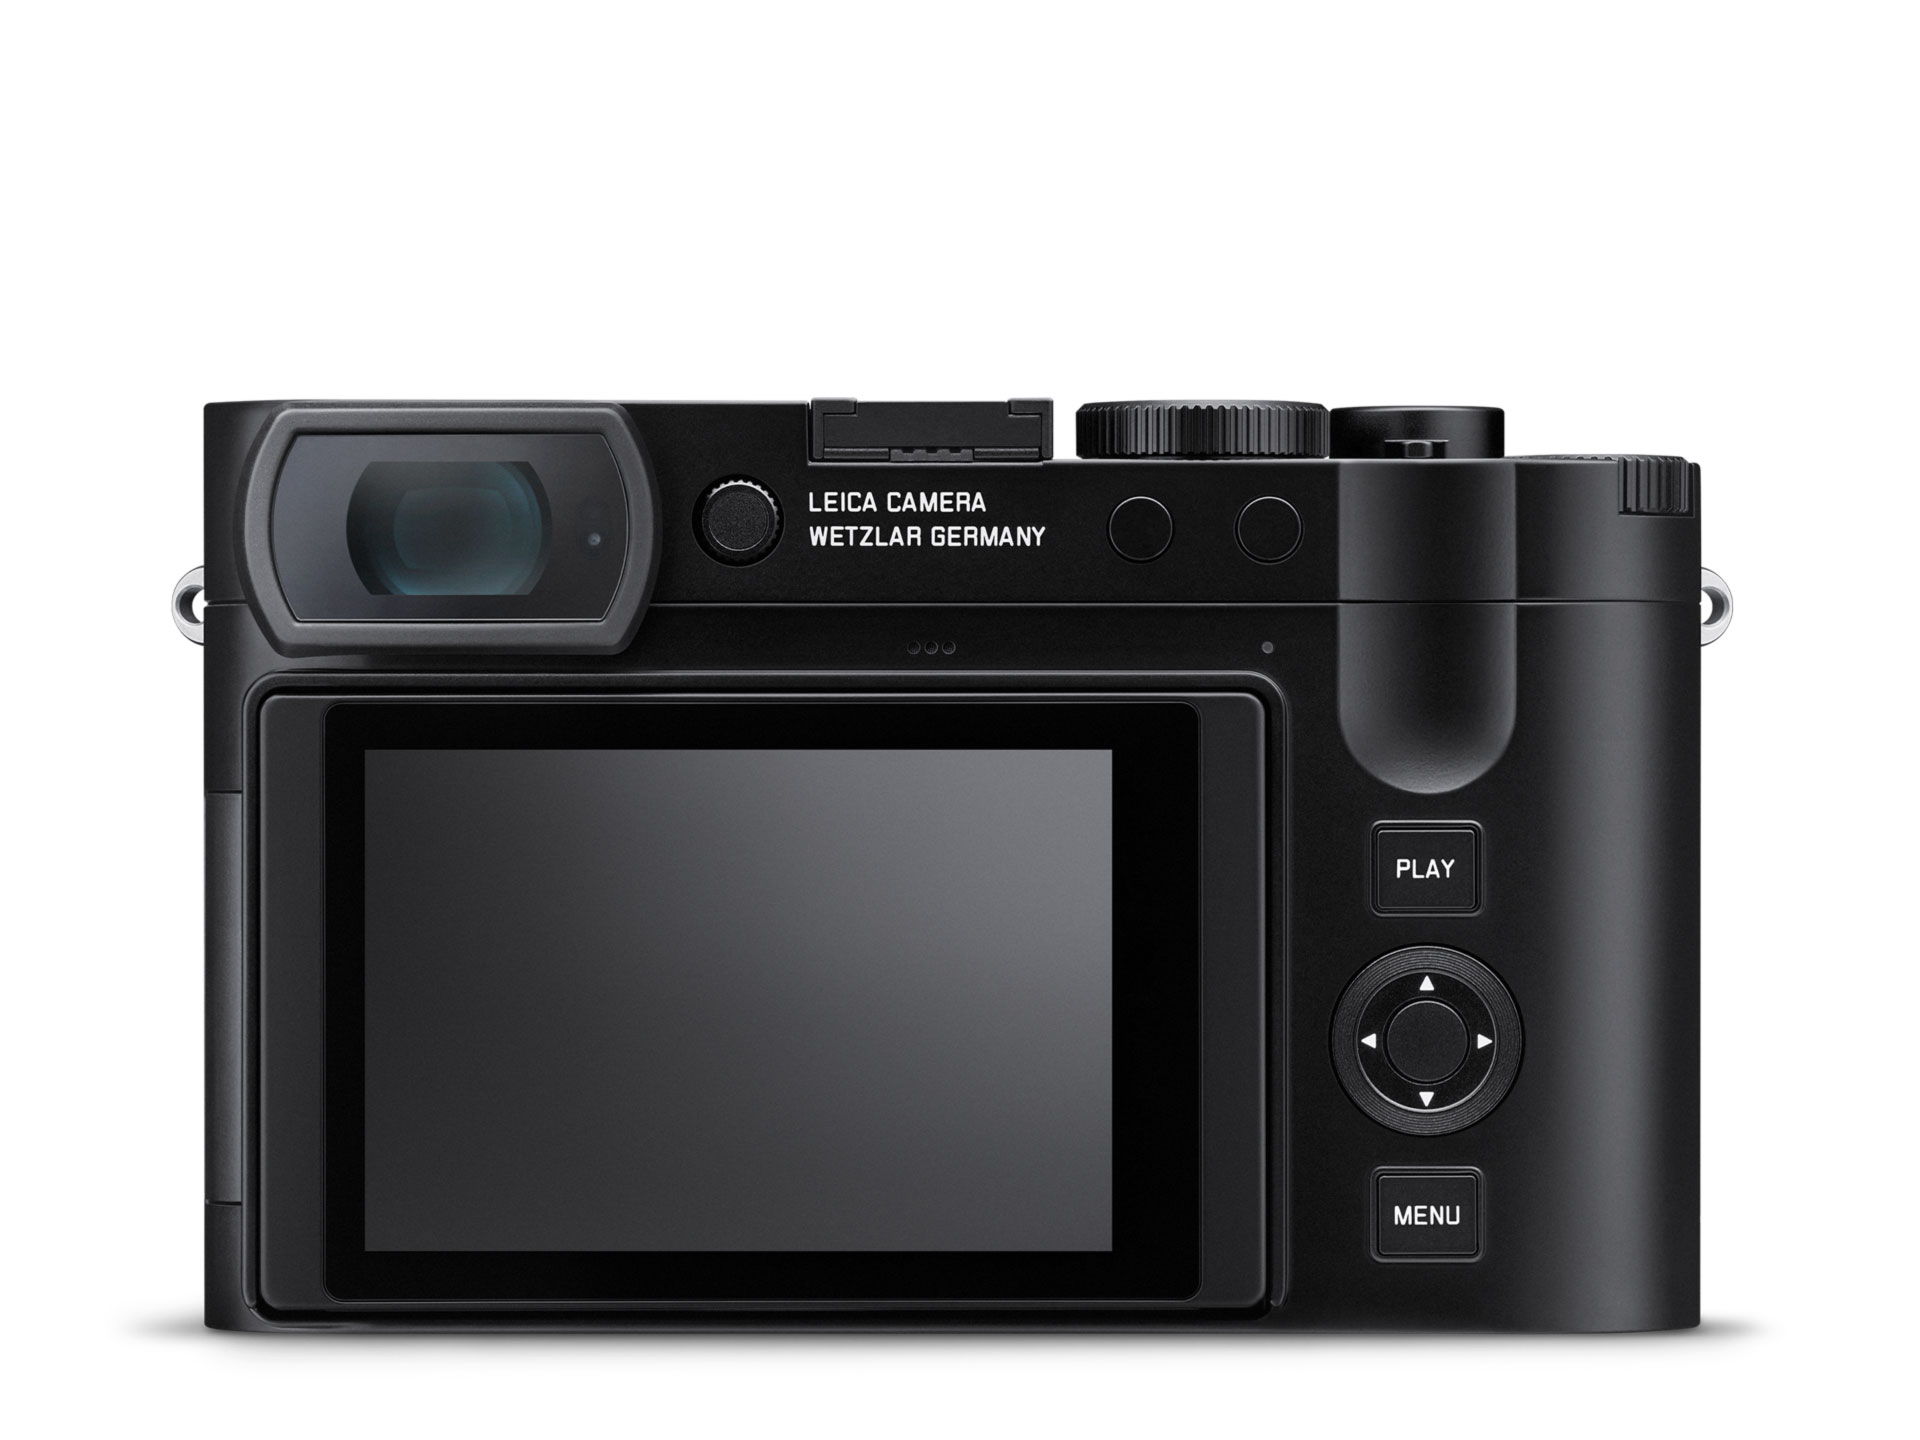 Pre-Order] Leica Q3 Digital Camera - FOTOFILE